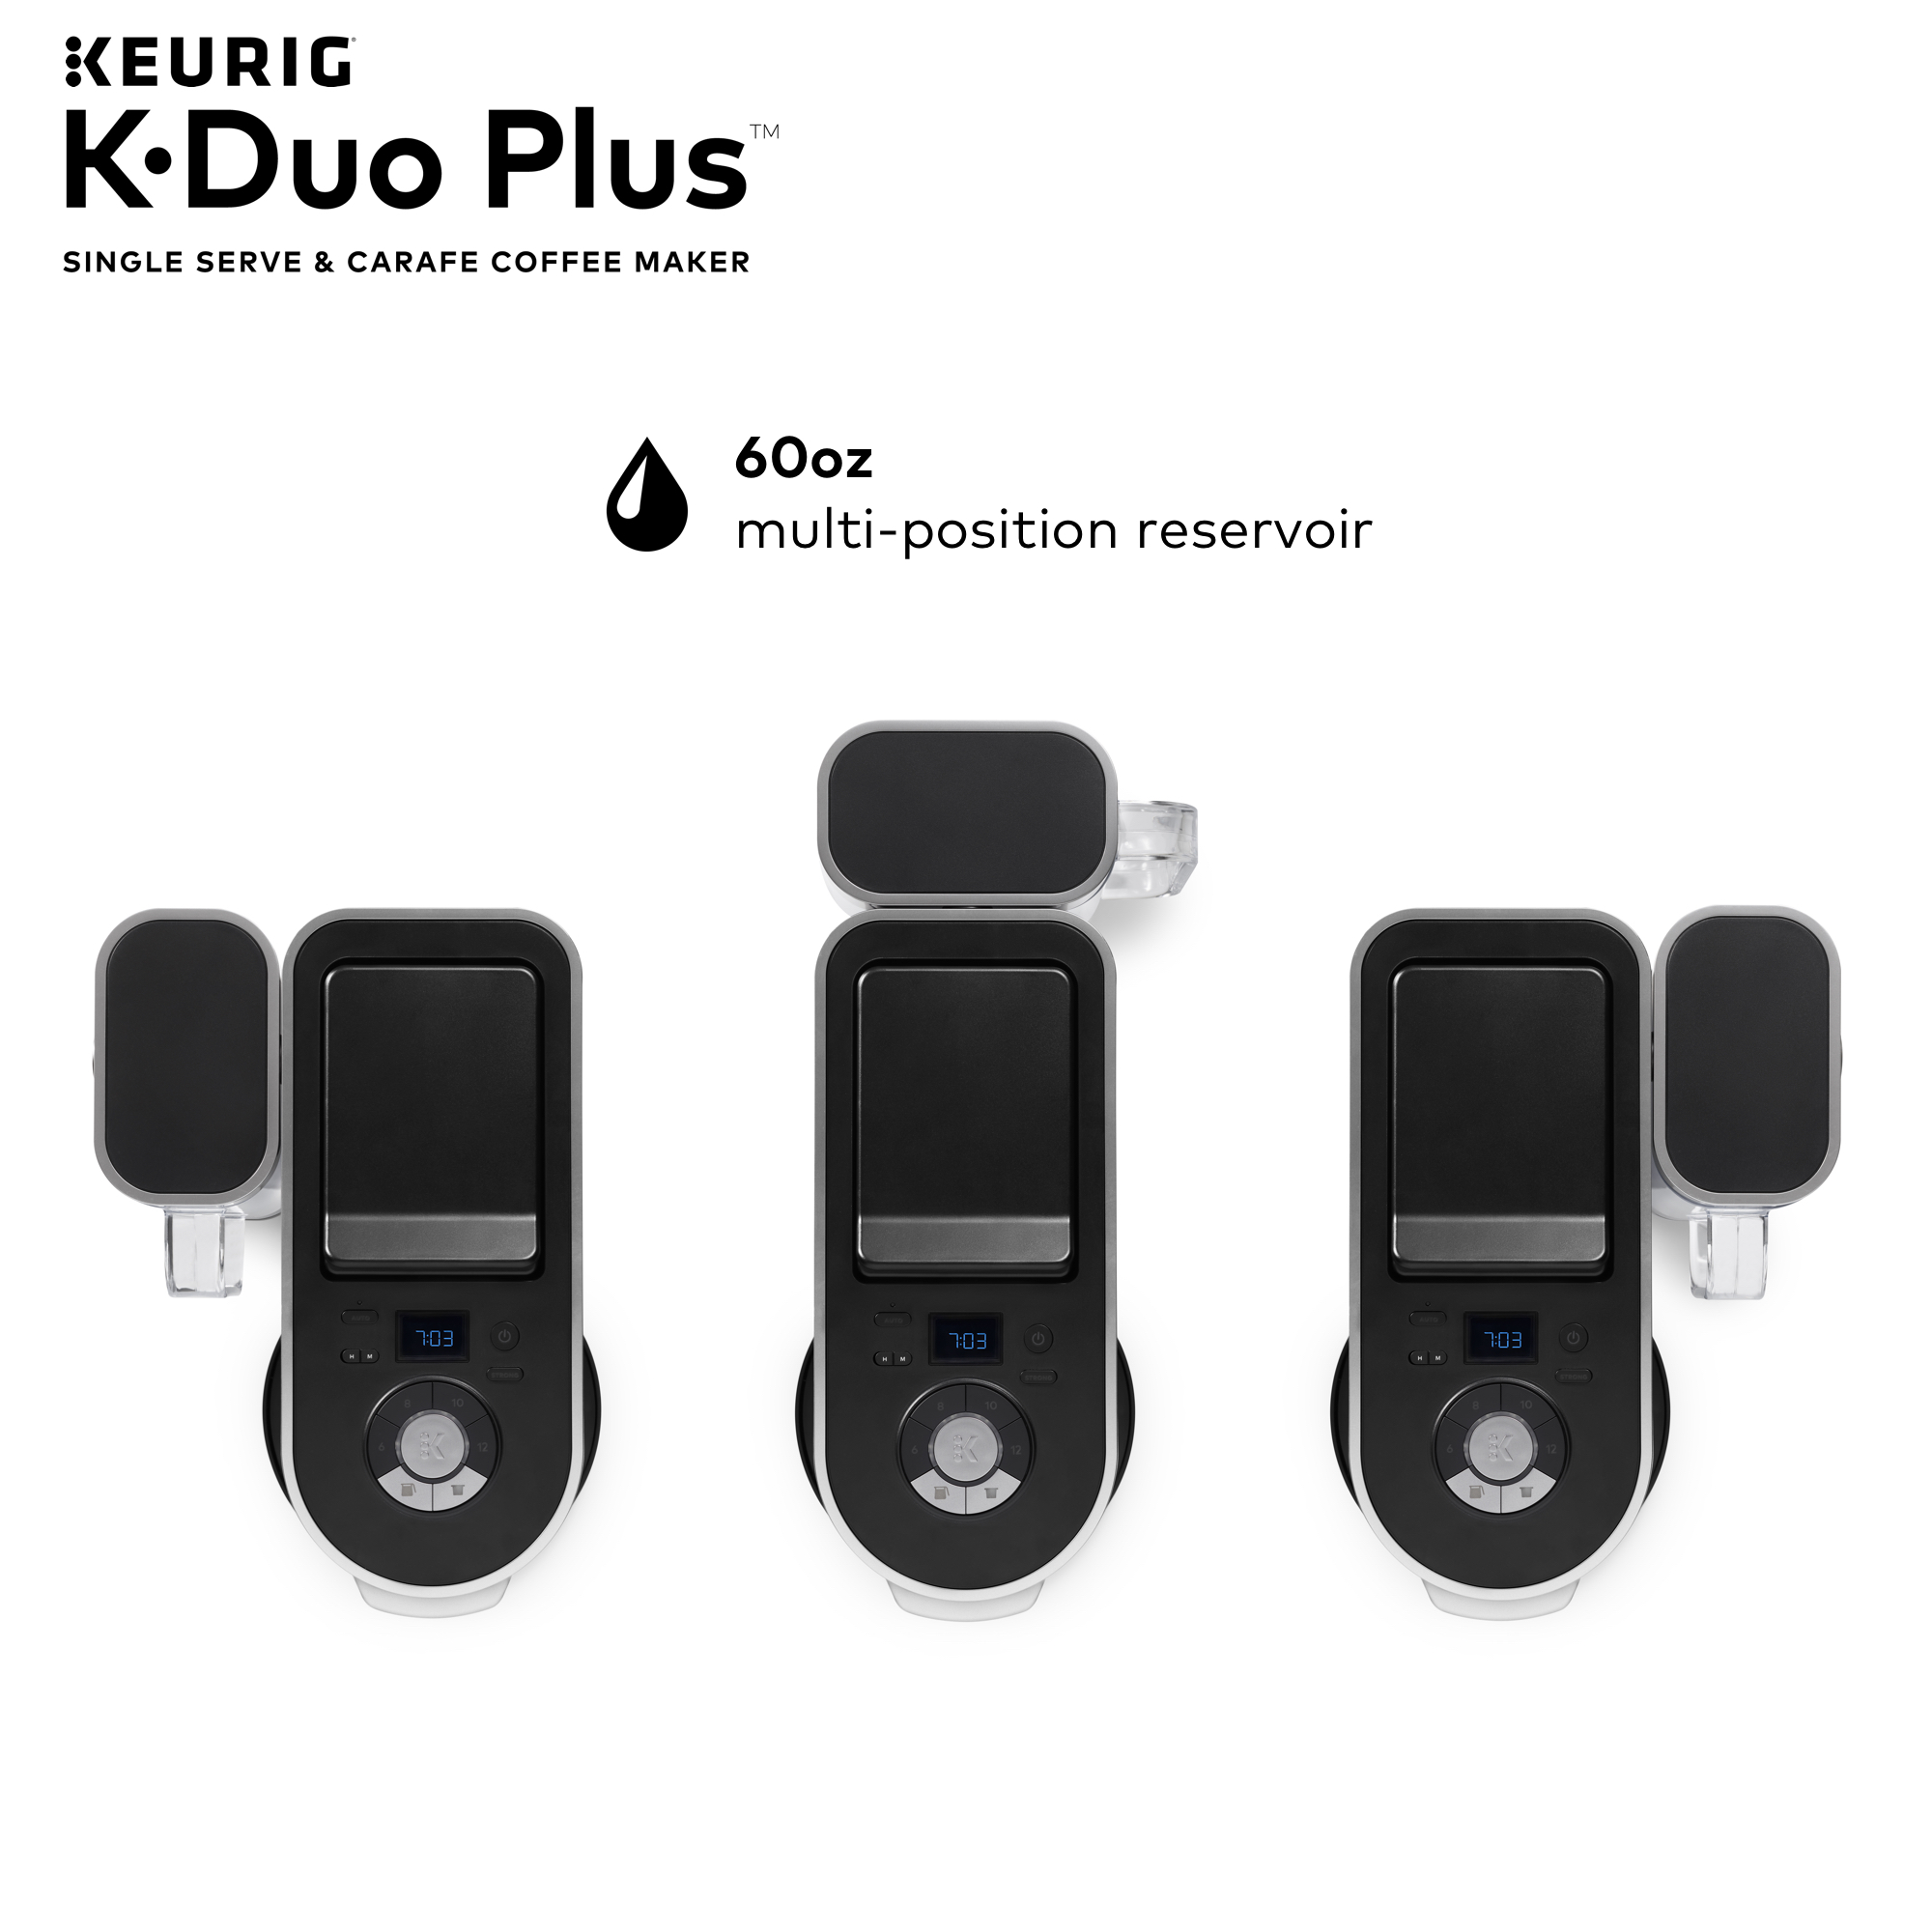 Keurig K-Duo Plus Single Serve & Carafe Coffee Maker - image 7 of 25